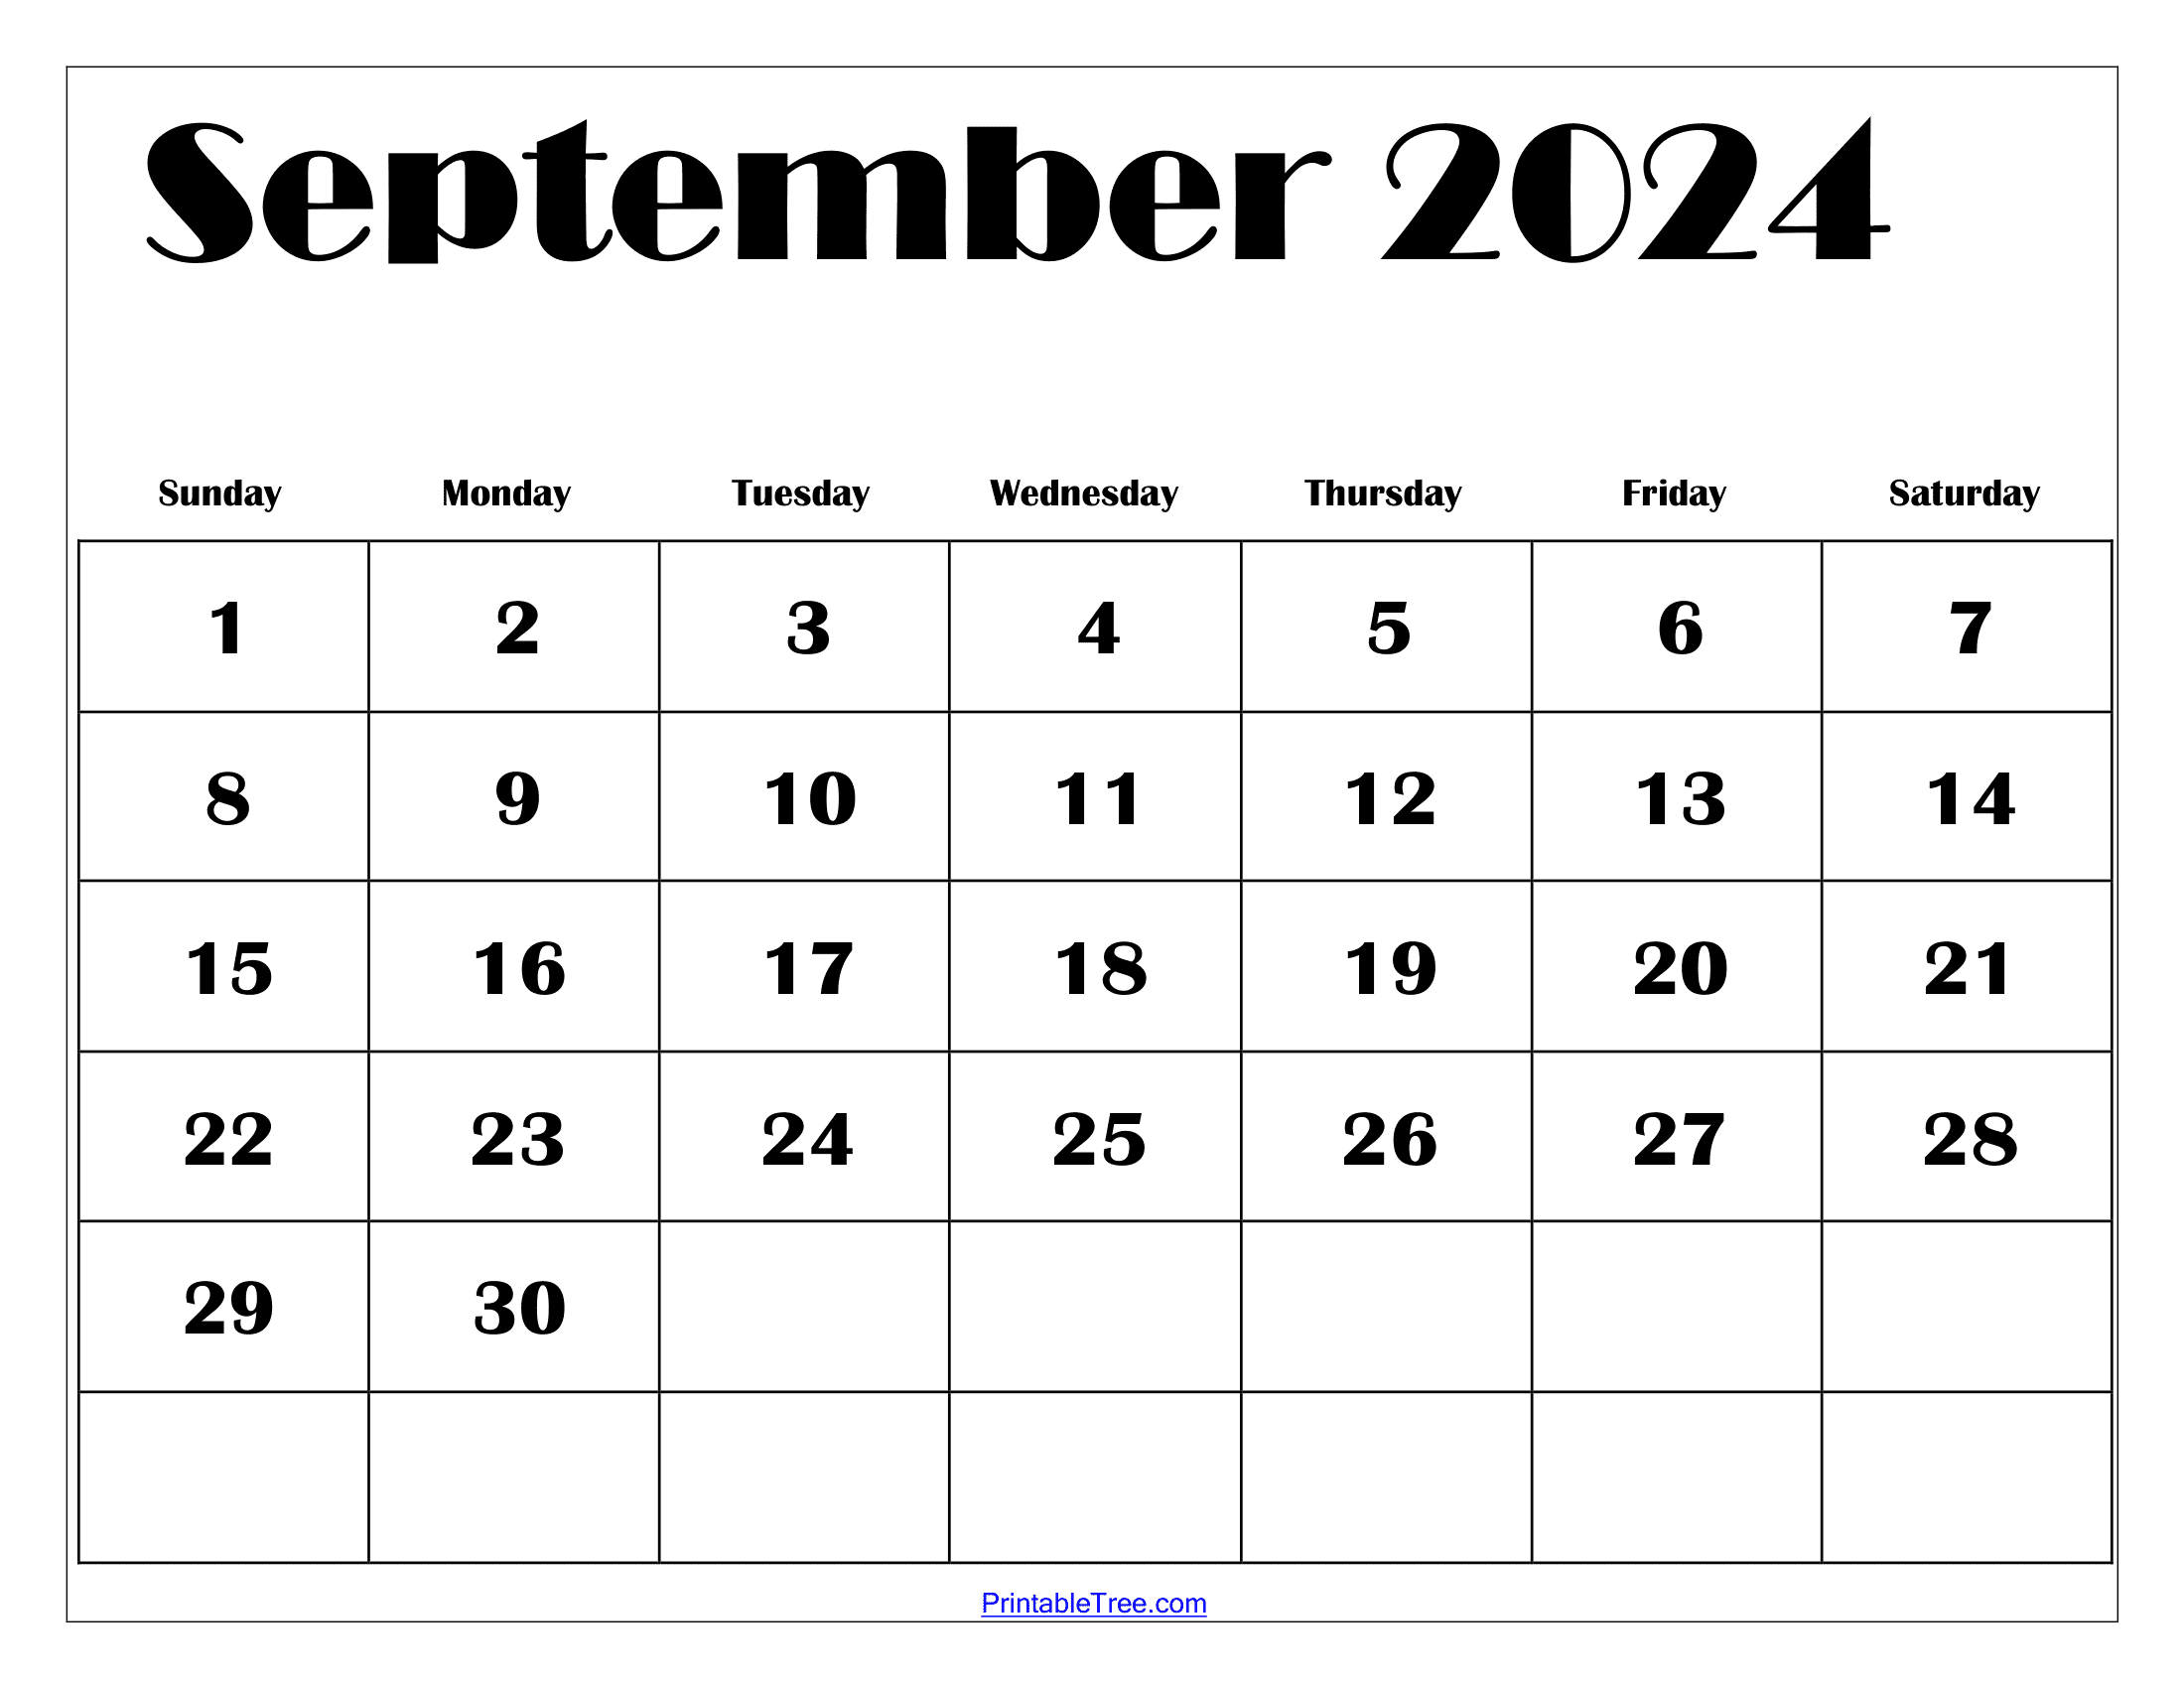 September 2024 Calendar Printable Pdf With Holidays for Printable September 2024 Calendar